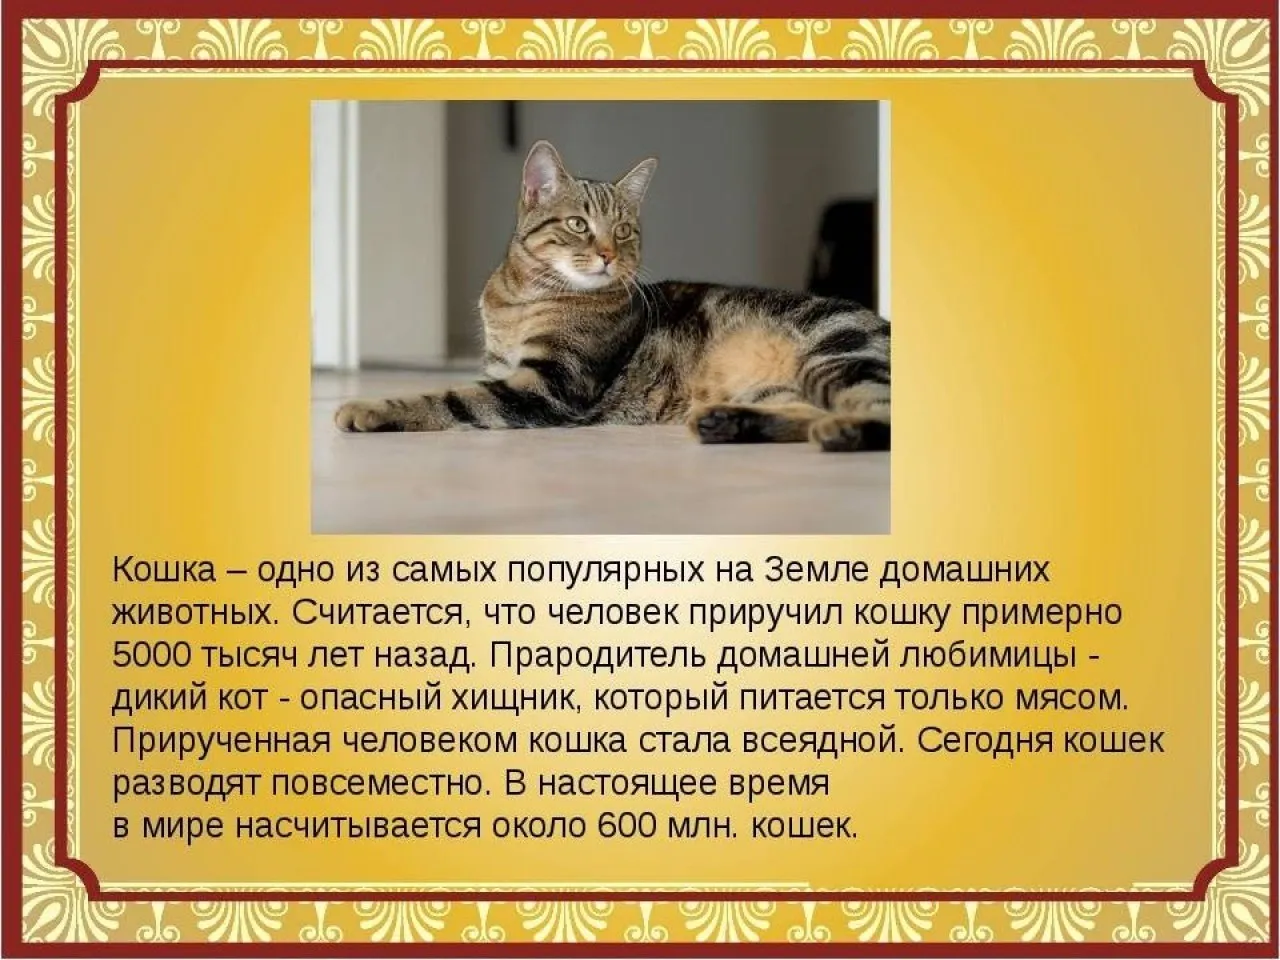 Текст описание про кошку 2 класс. Рассказ о домашних кошках. Расказо домашней кошке. Сообщение о домашних кошках. Рассказ про домашнее животное кота.